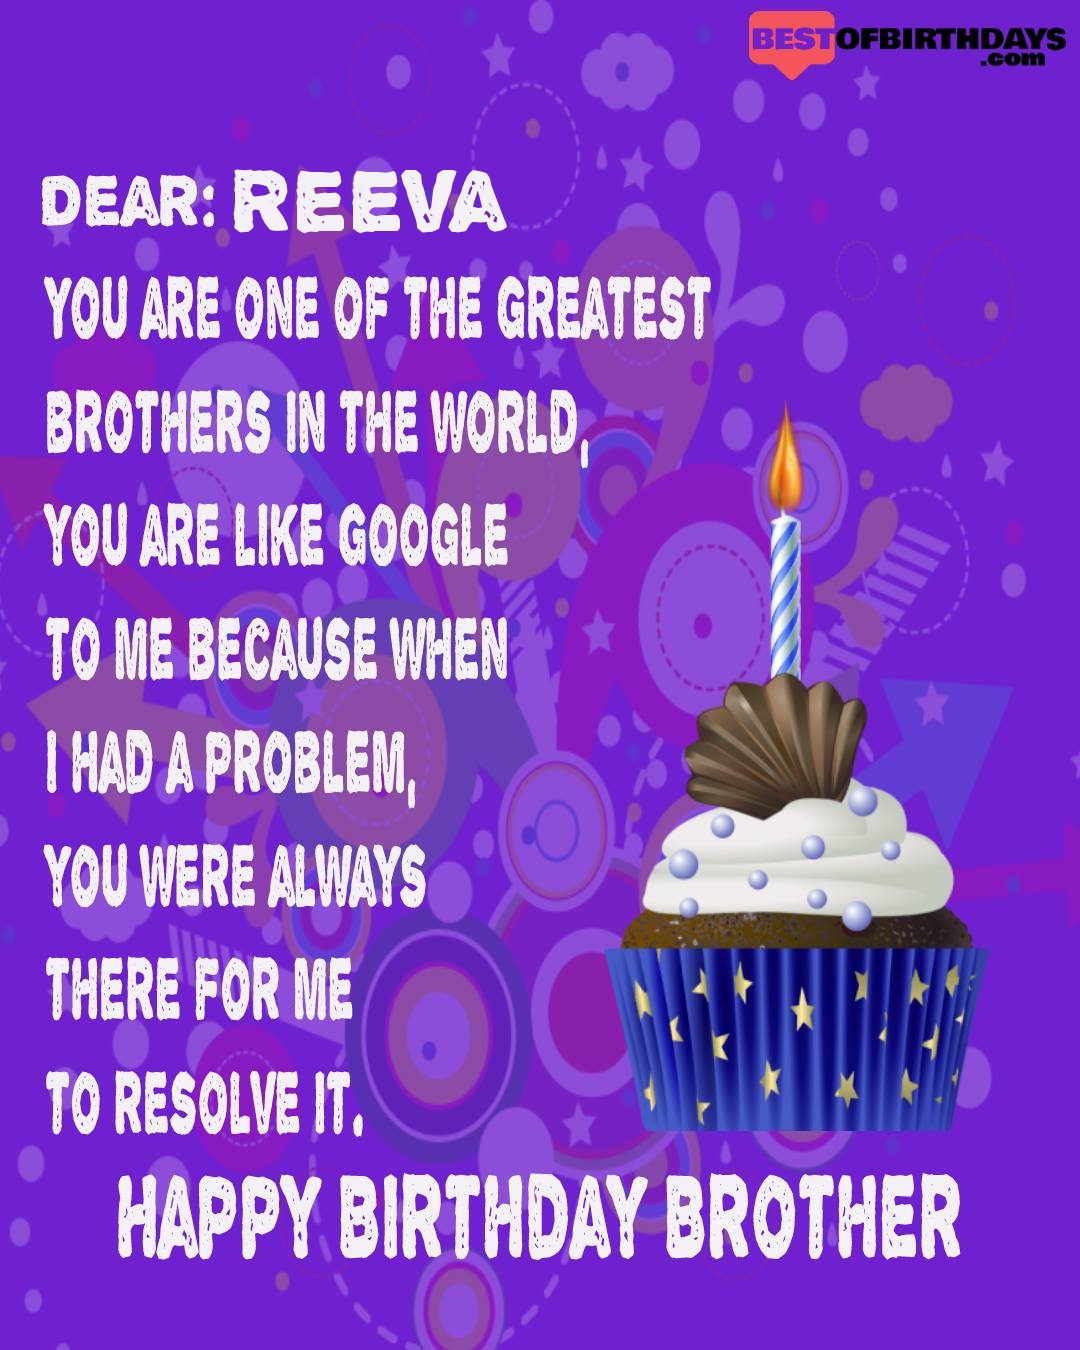 Happy birthday reeva bhai brother bro